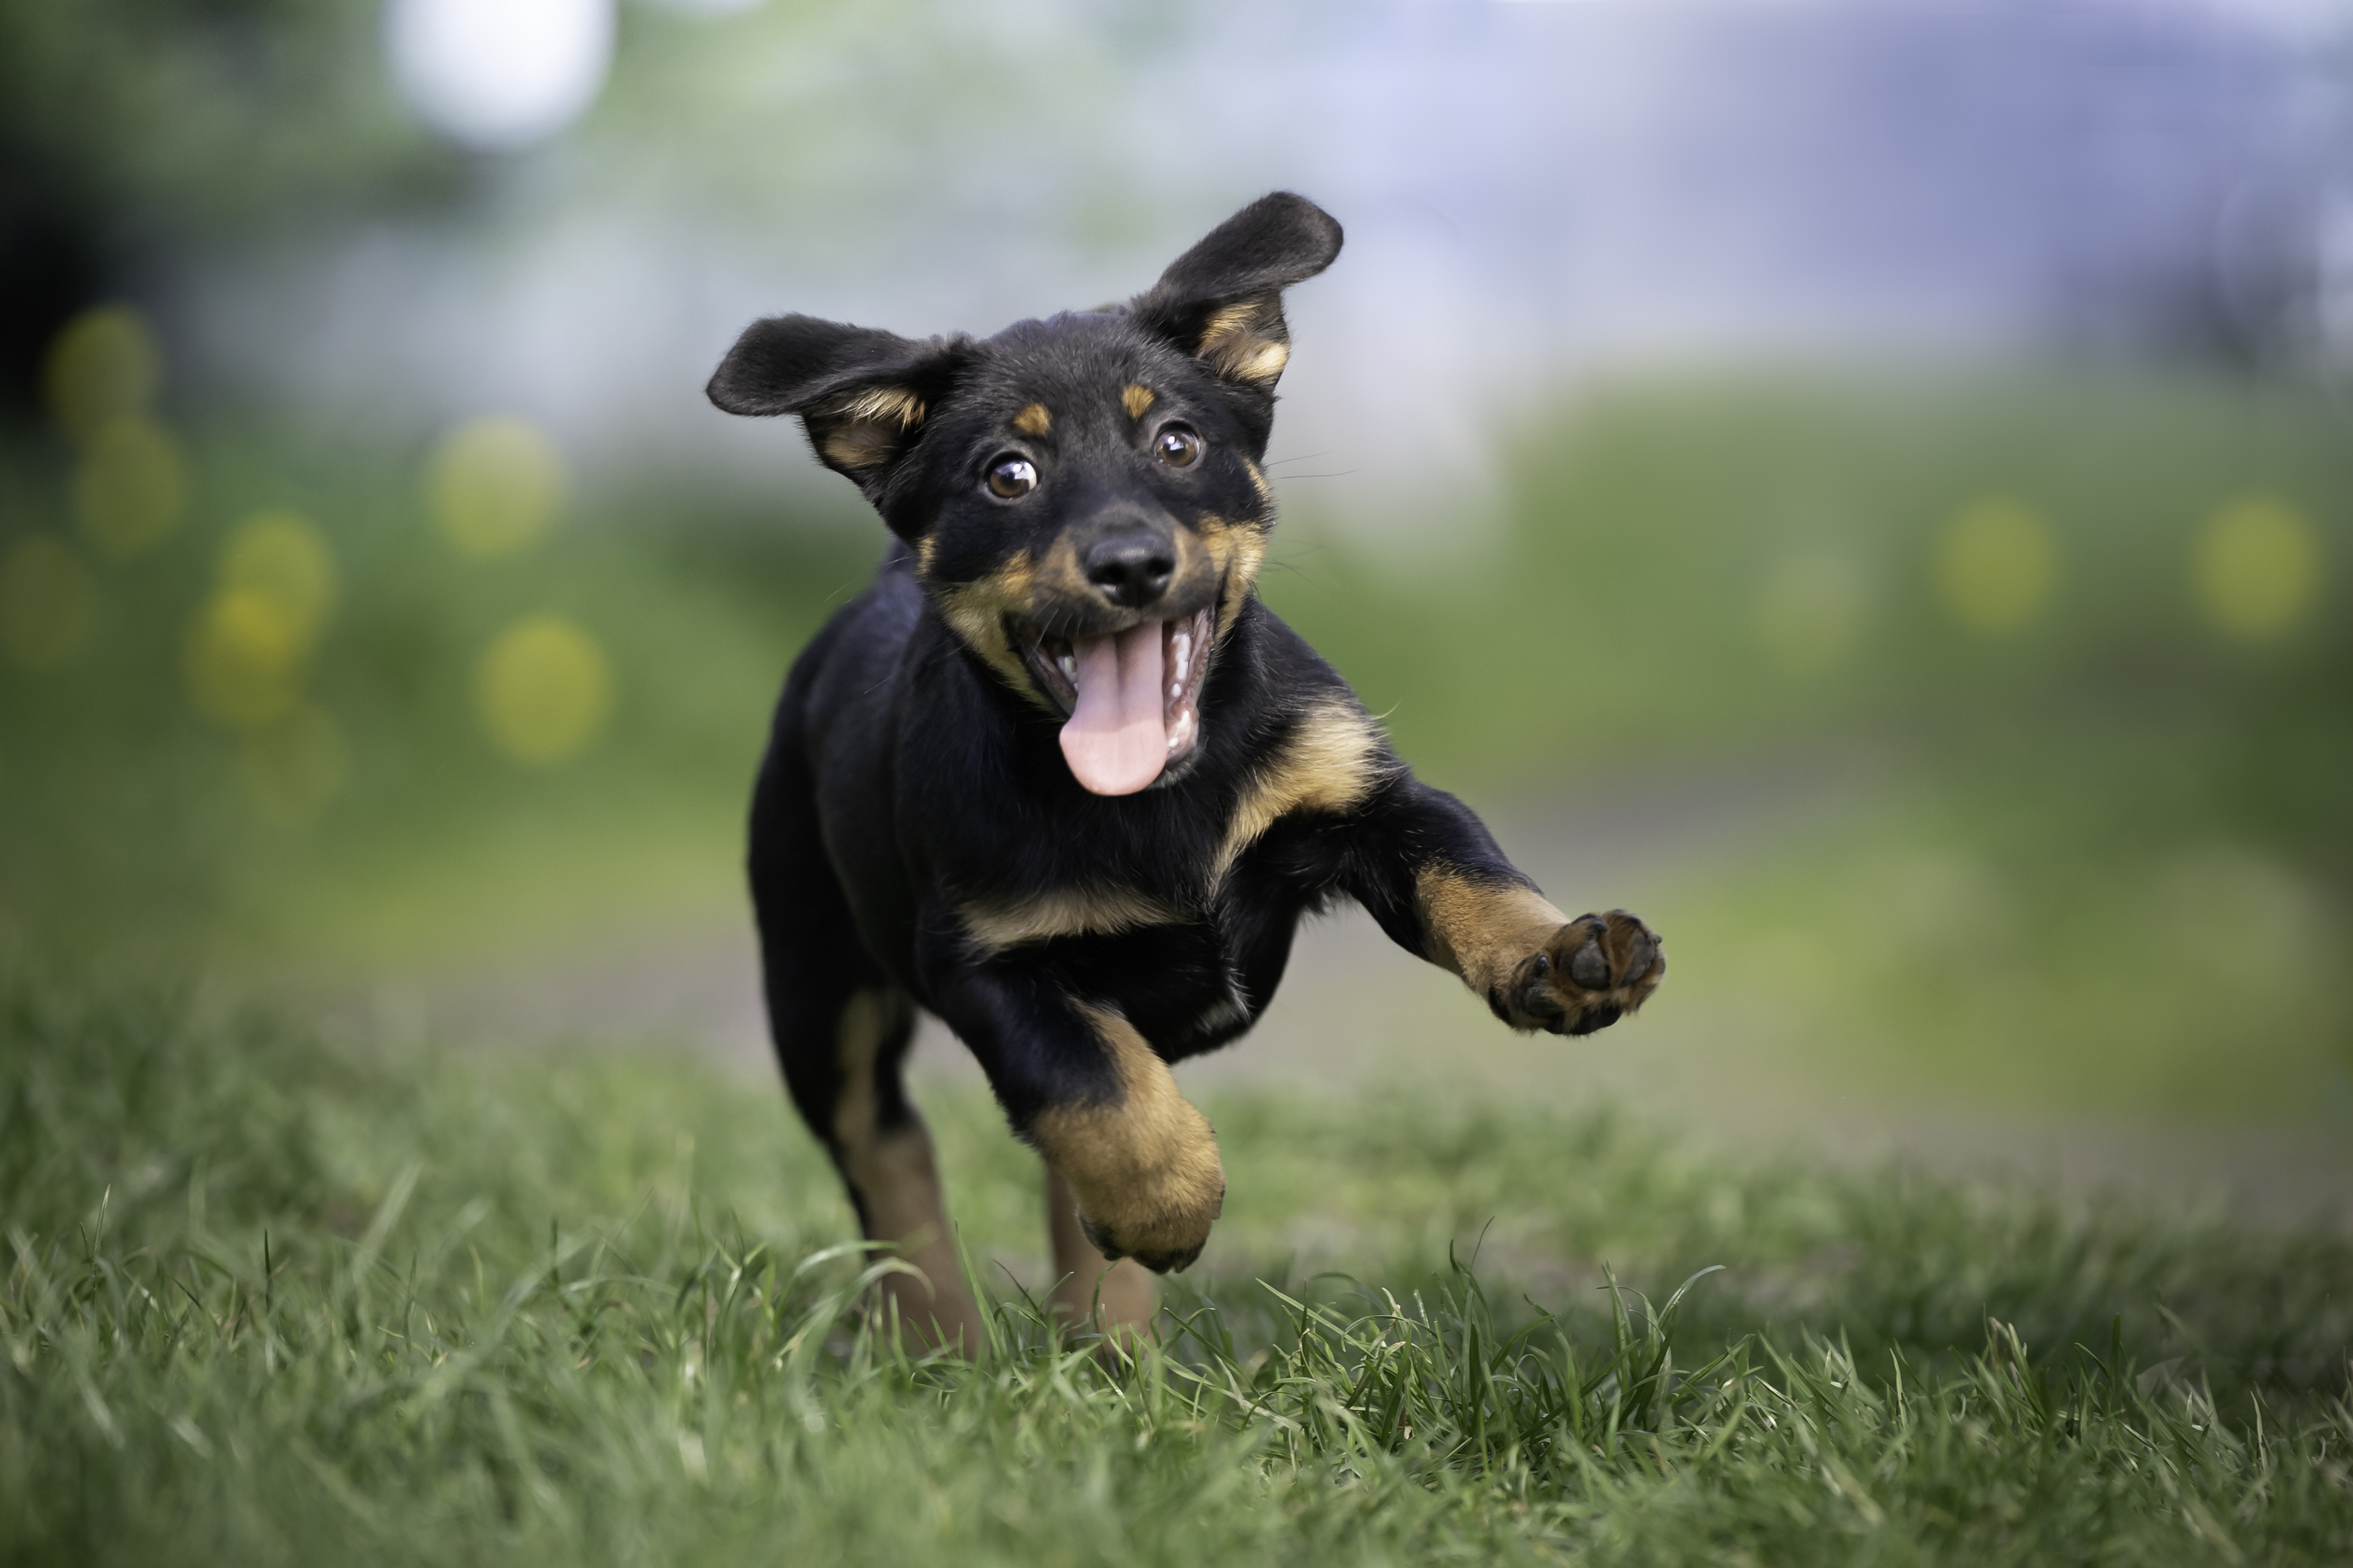 a puppy running in a field